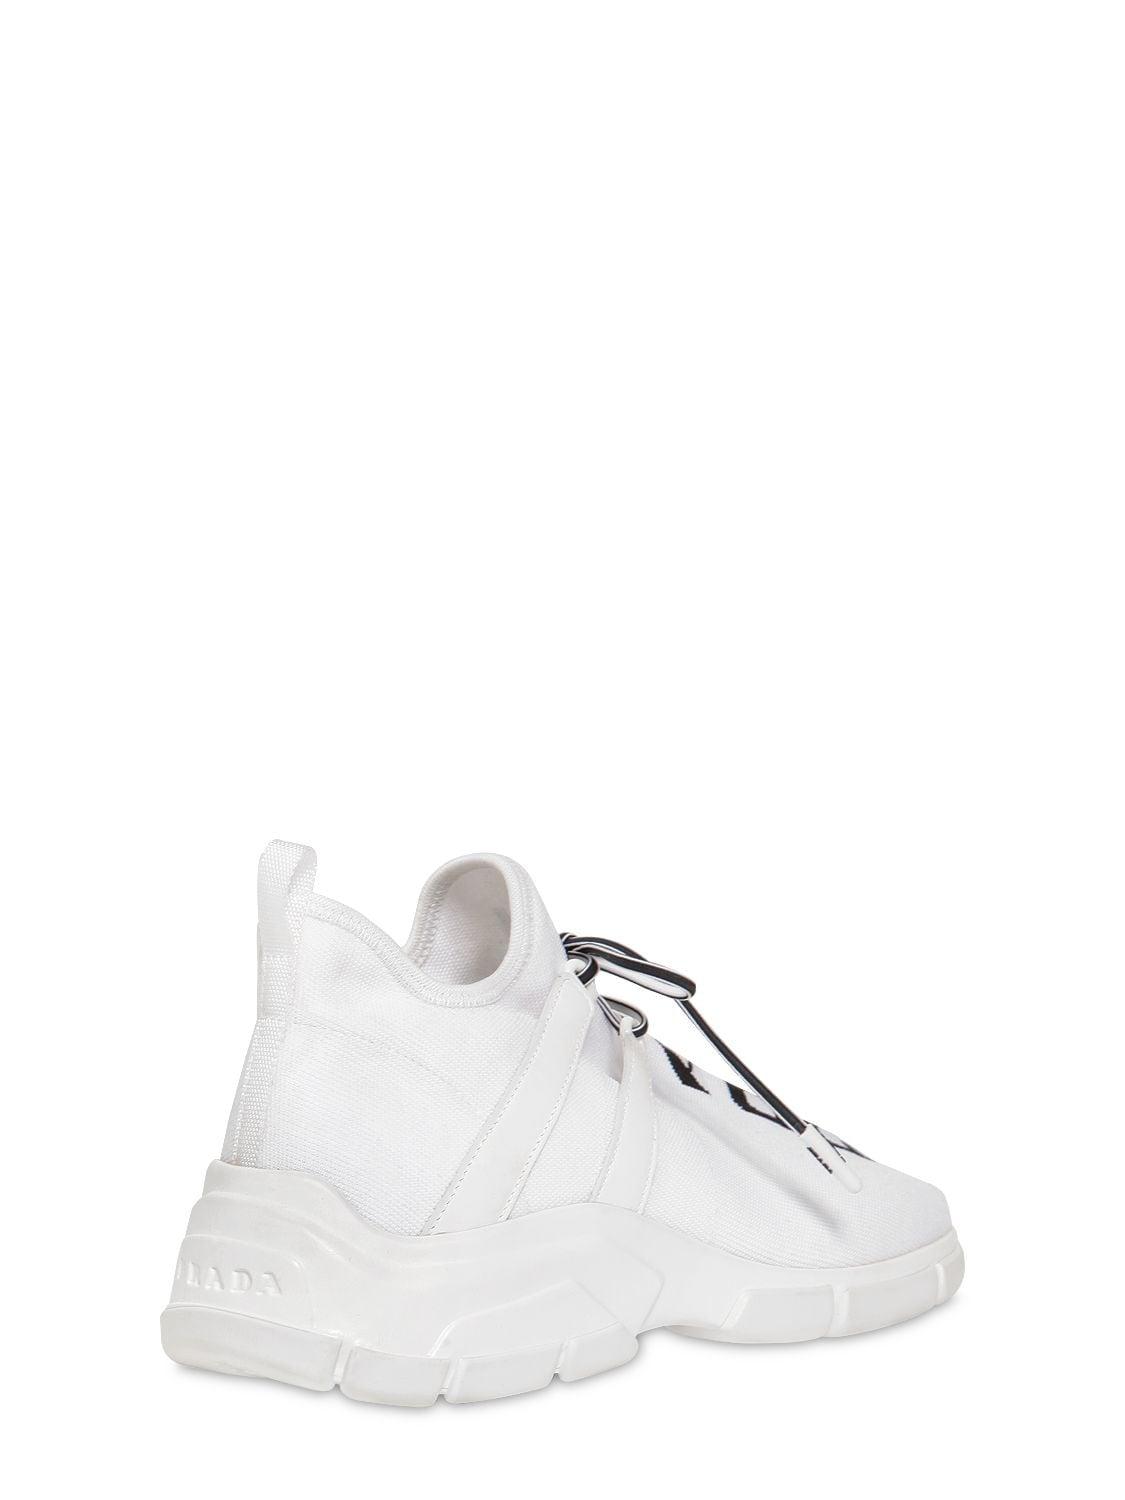 Prada 30mm Knit Sock Sneakers in White | Lyst